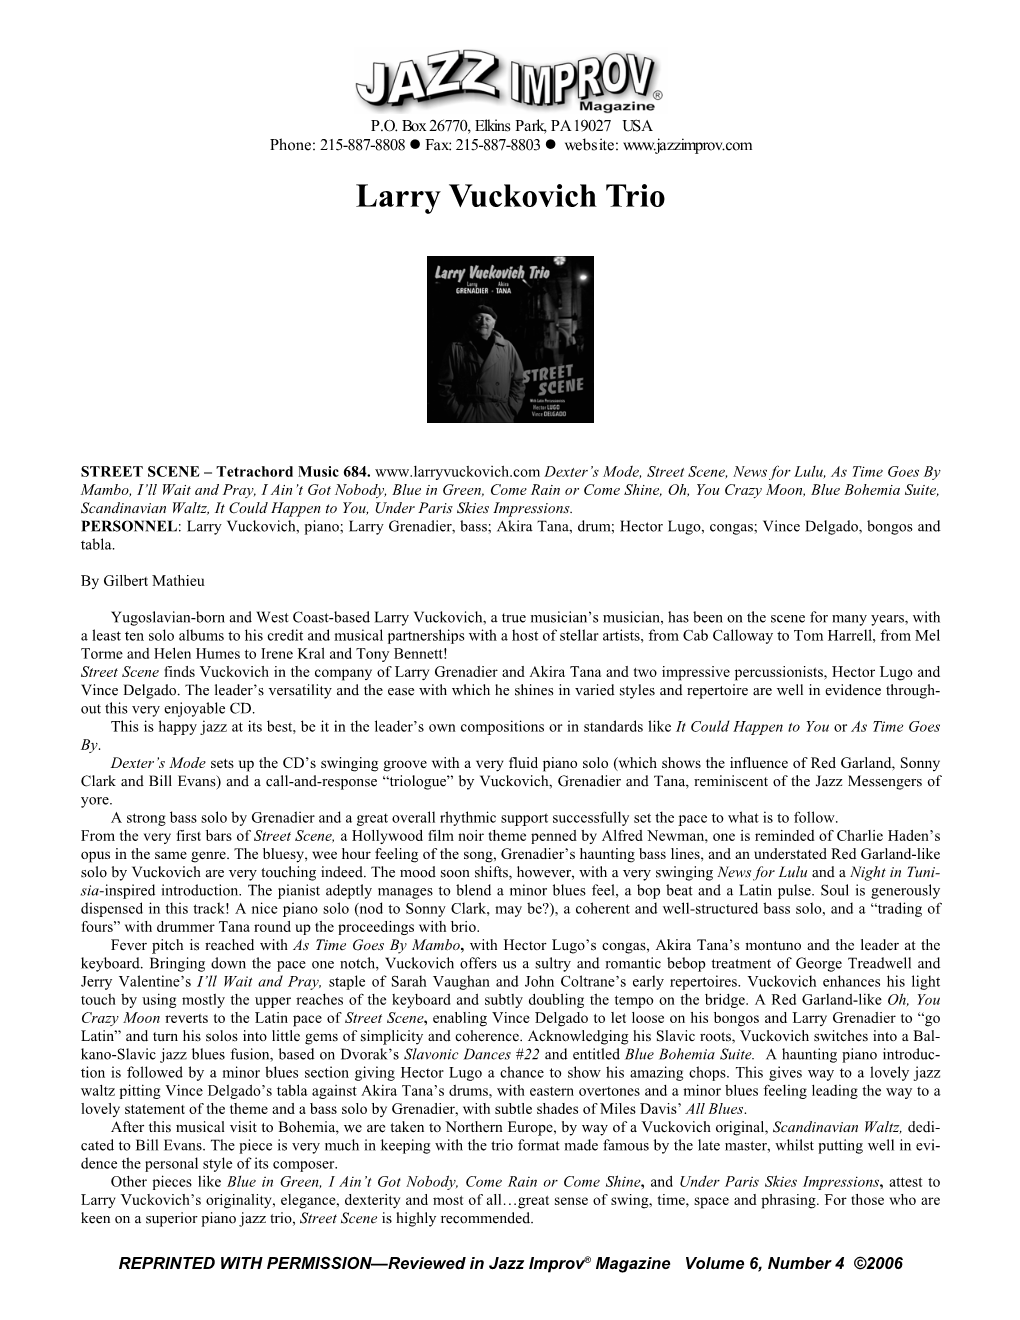 Larry Vuckovich CD Review V6N4.Pub